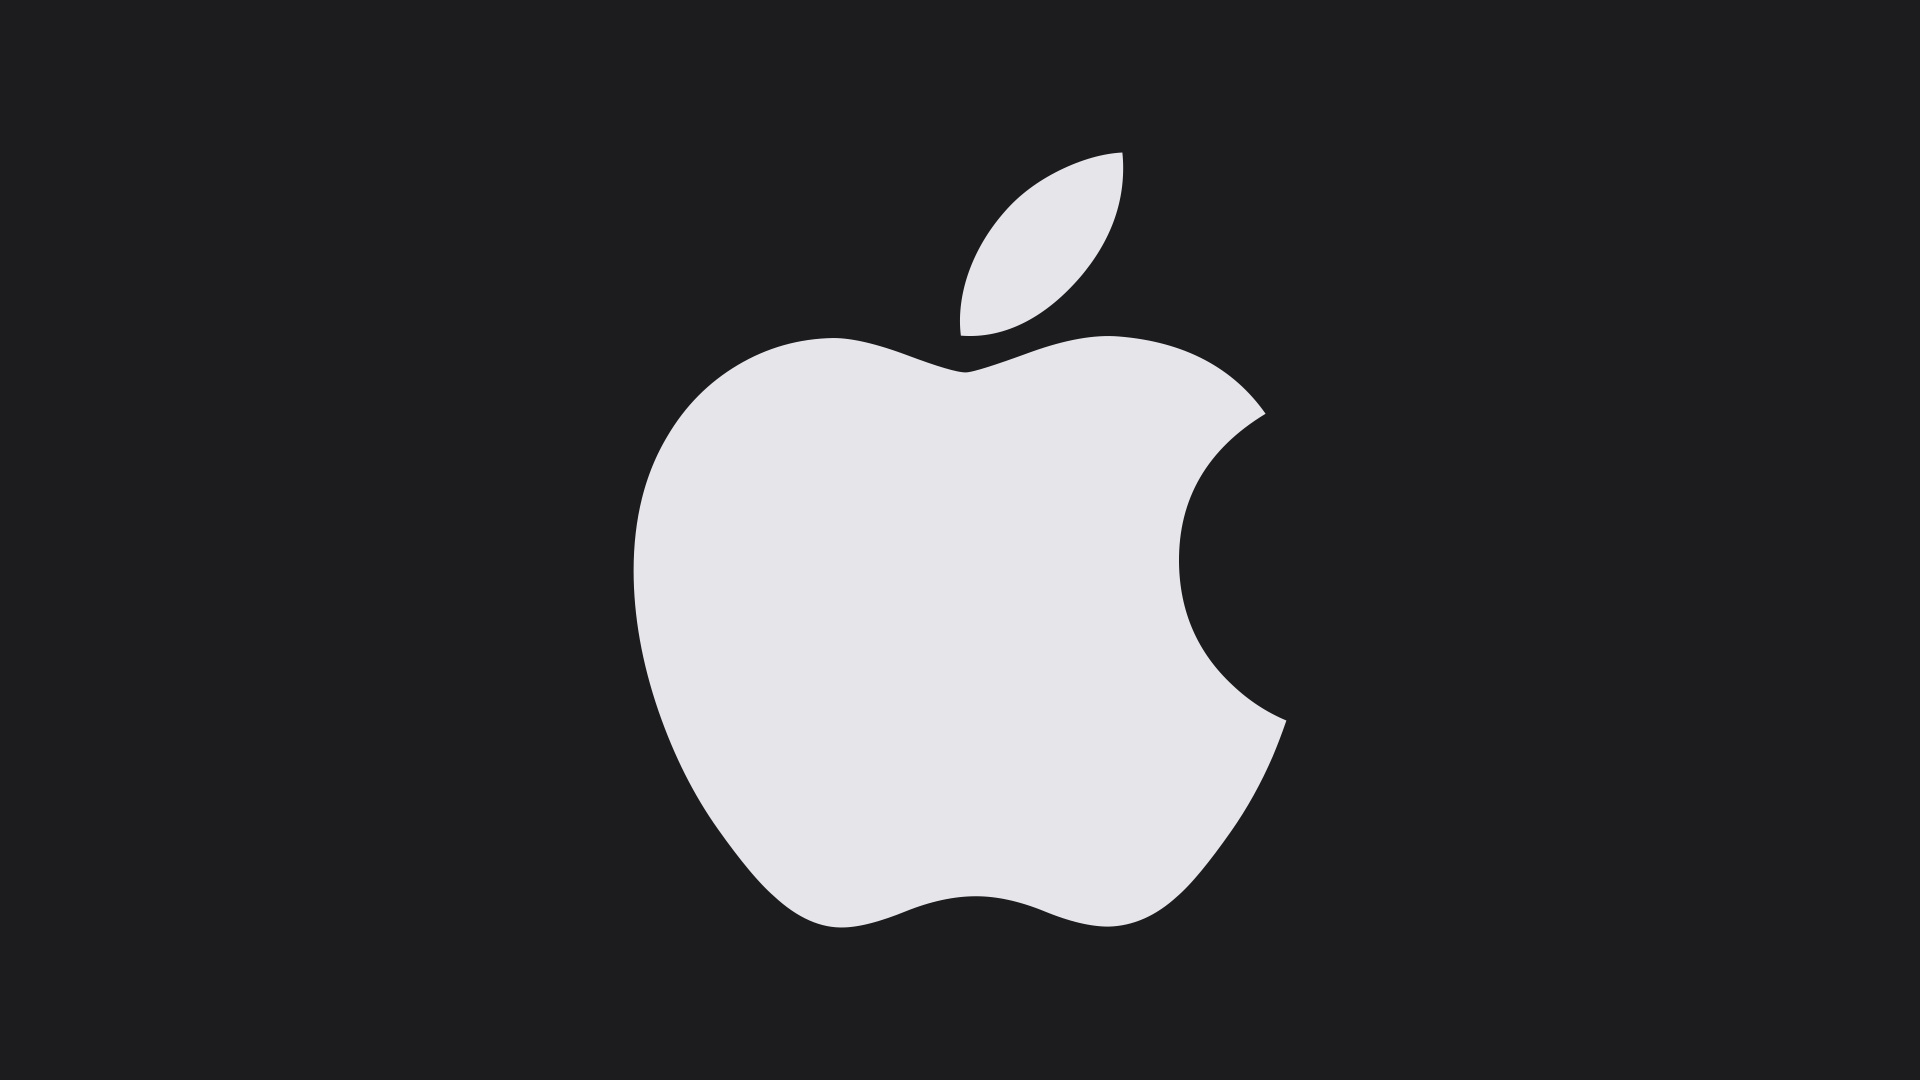 Обои на телефон с логотипом apple